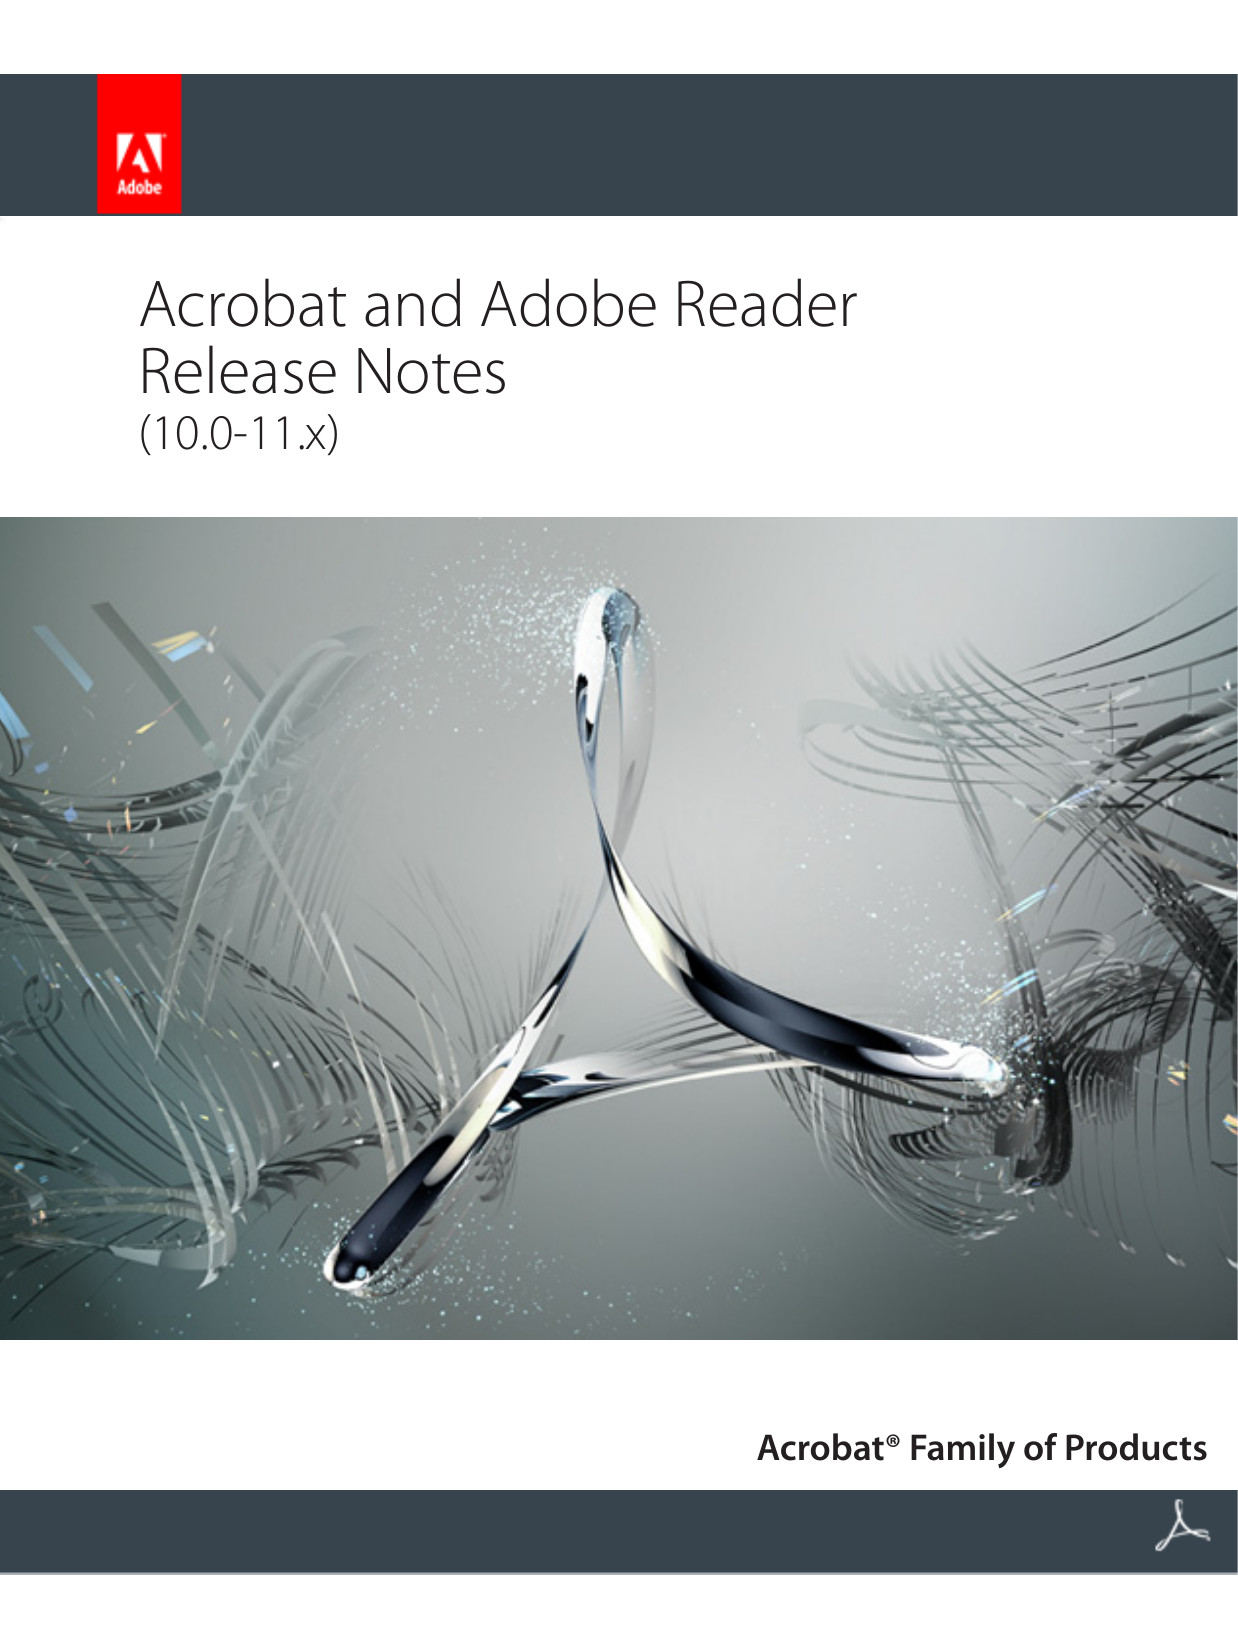 adobe reader for mac 10.5.8